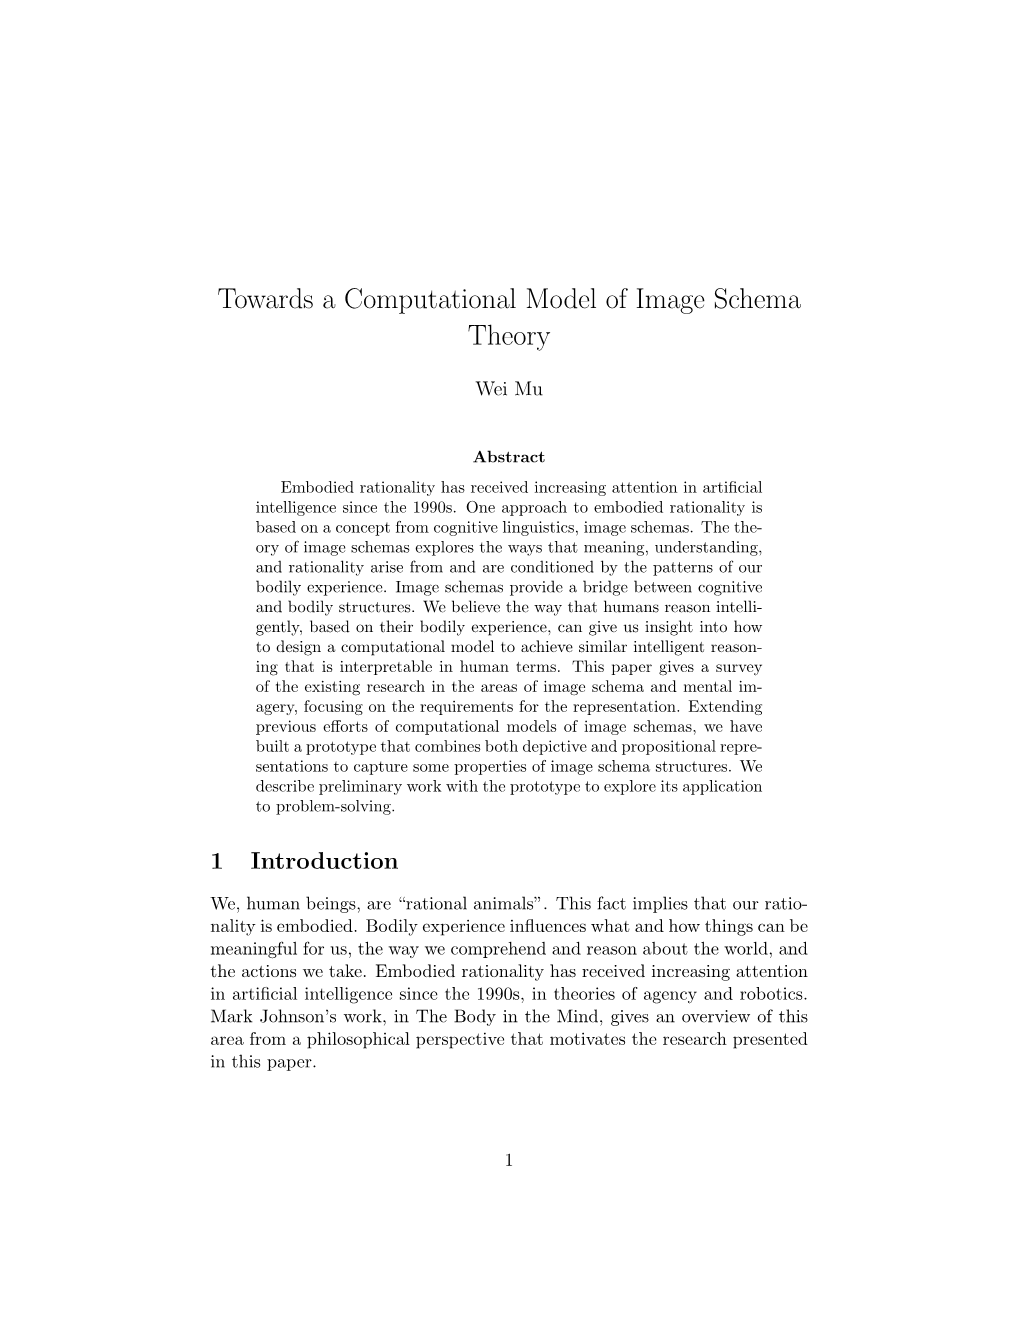 Towards a Computational Model of Image Schema Theory